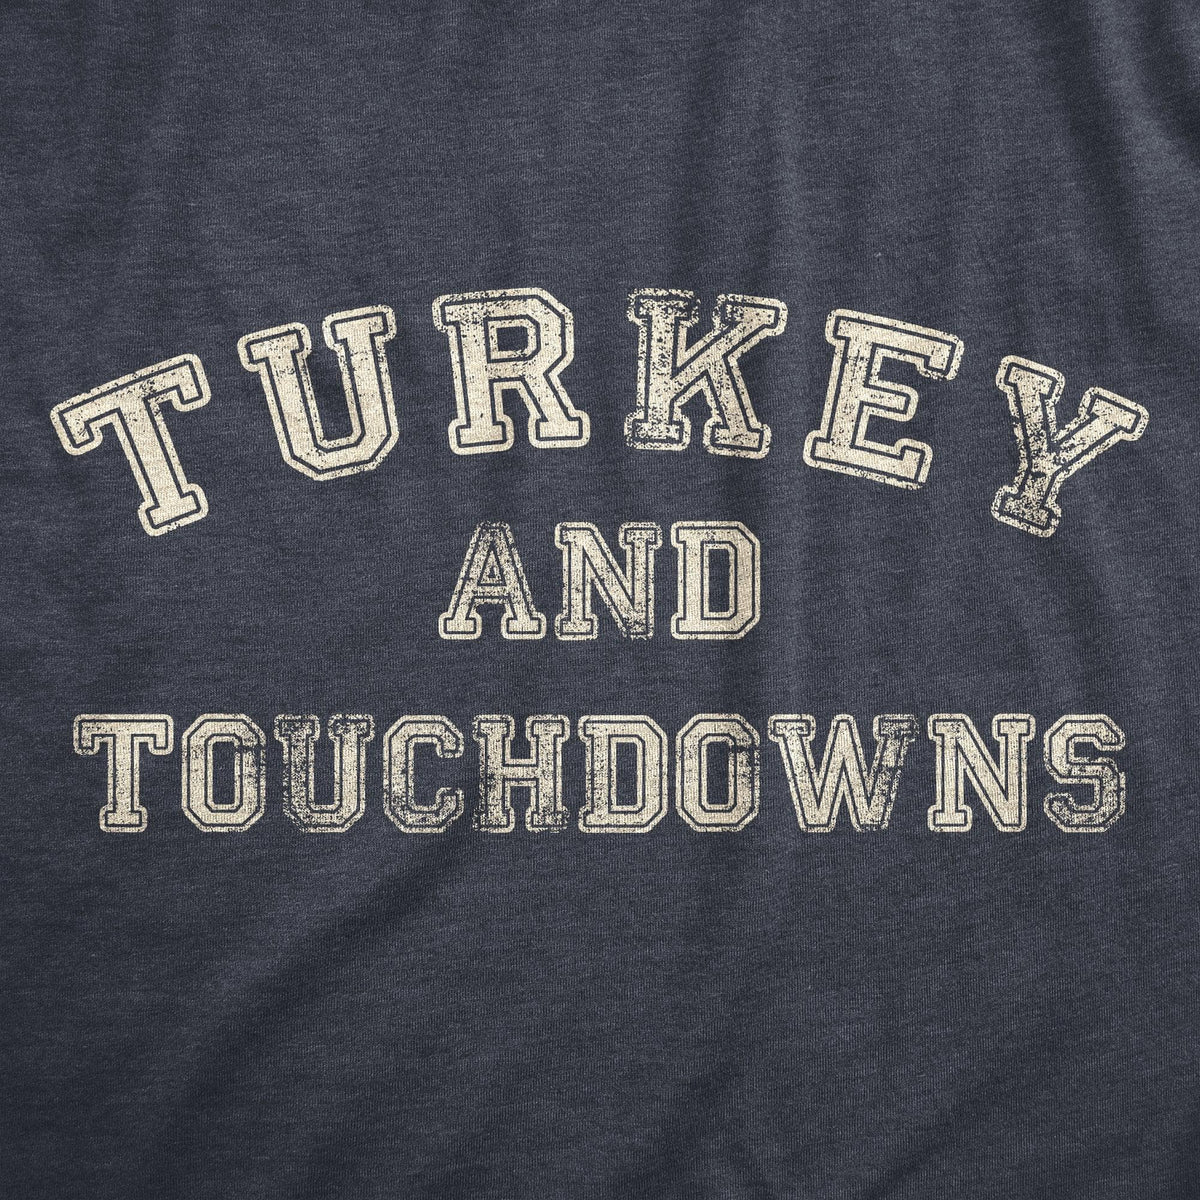 Turkey And Touchdowns Men&#39;s Tshirt  -  Crazy Dog T-Shirts